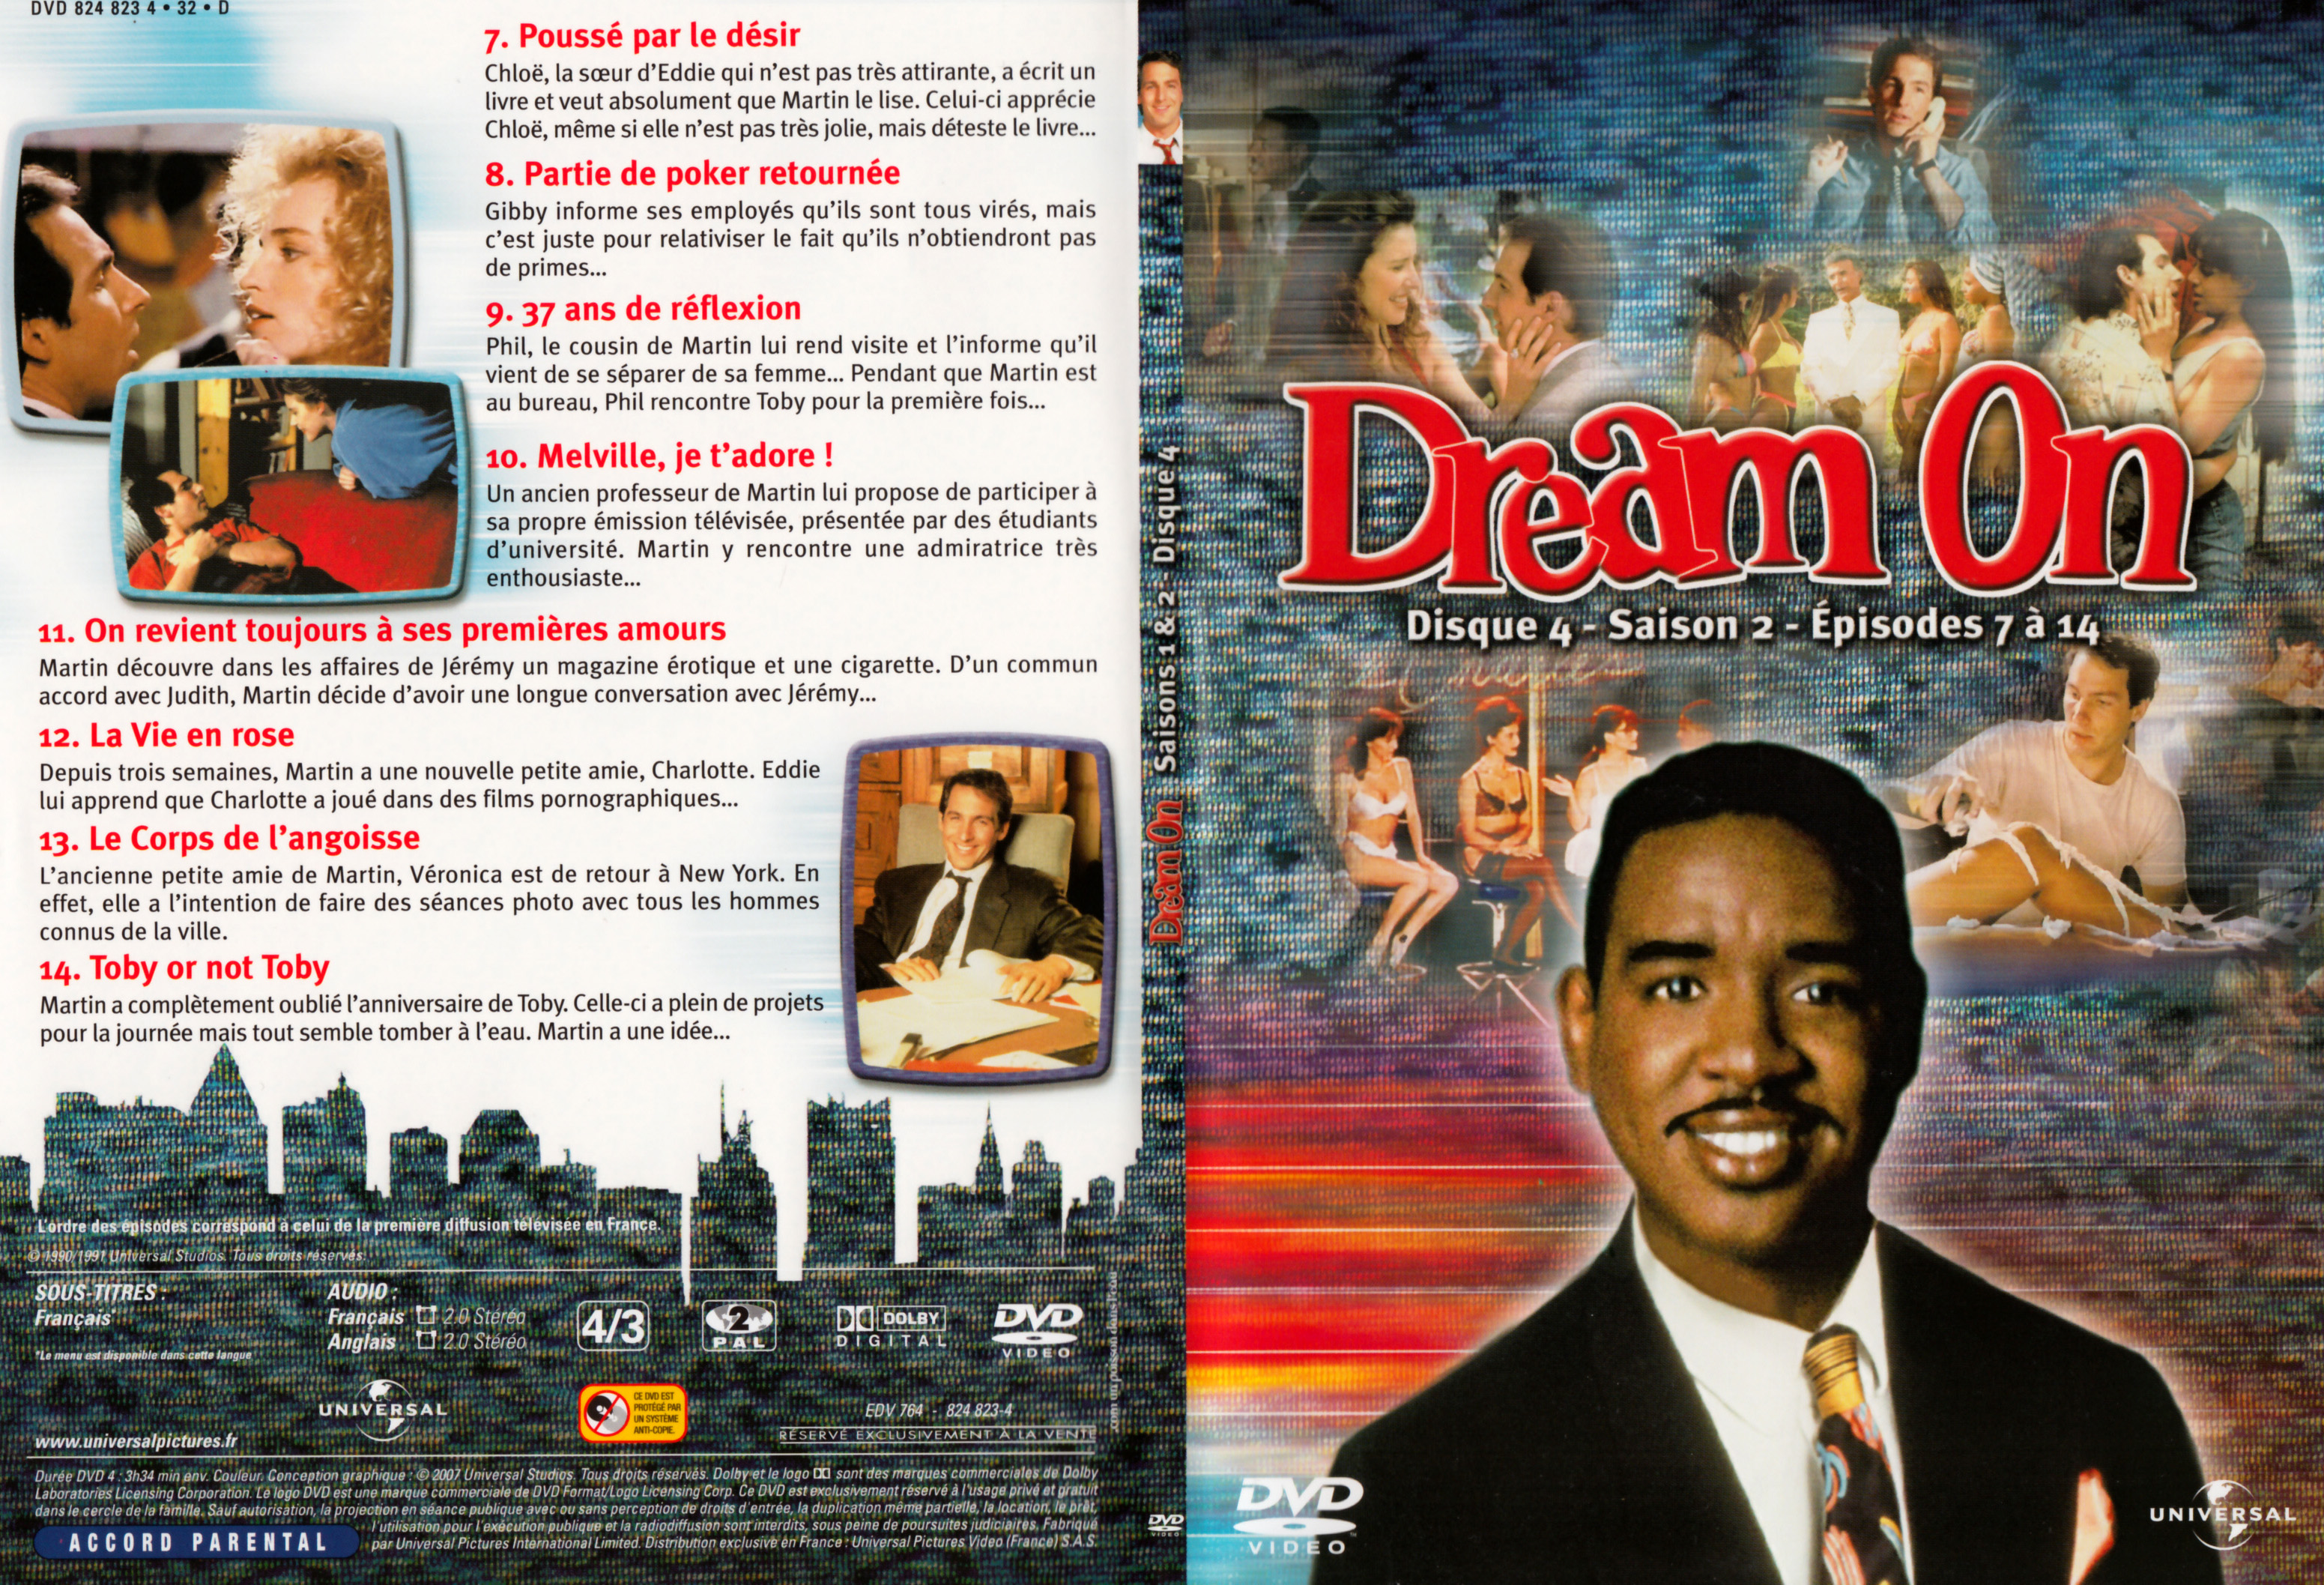 Jaquette DVD Dream on Saison 1 DVD 4